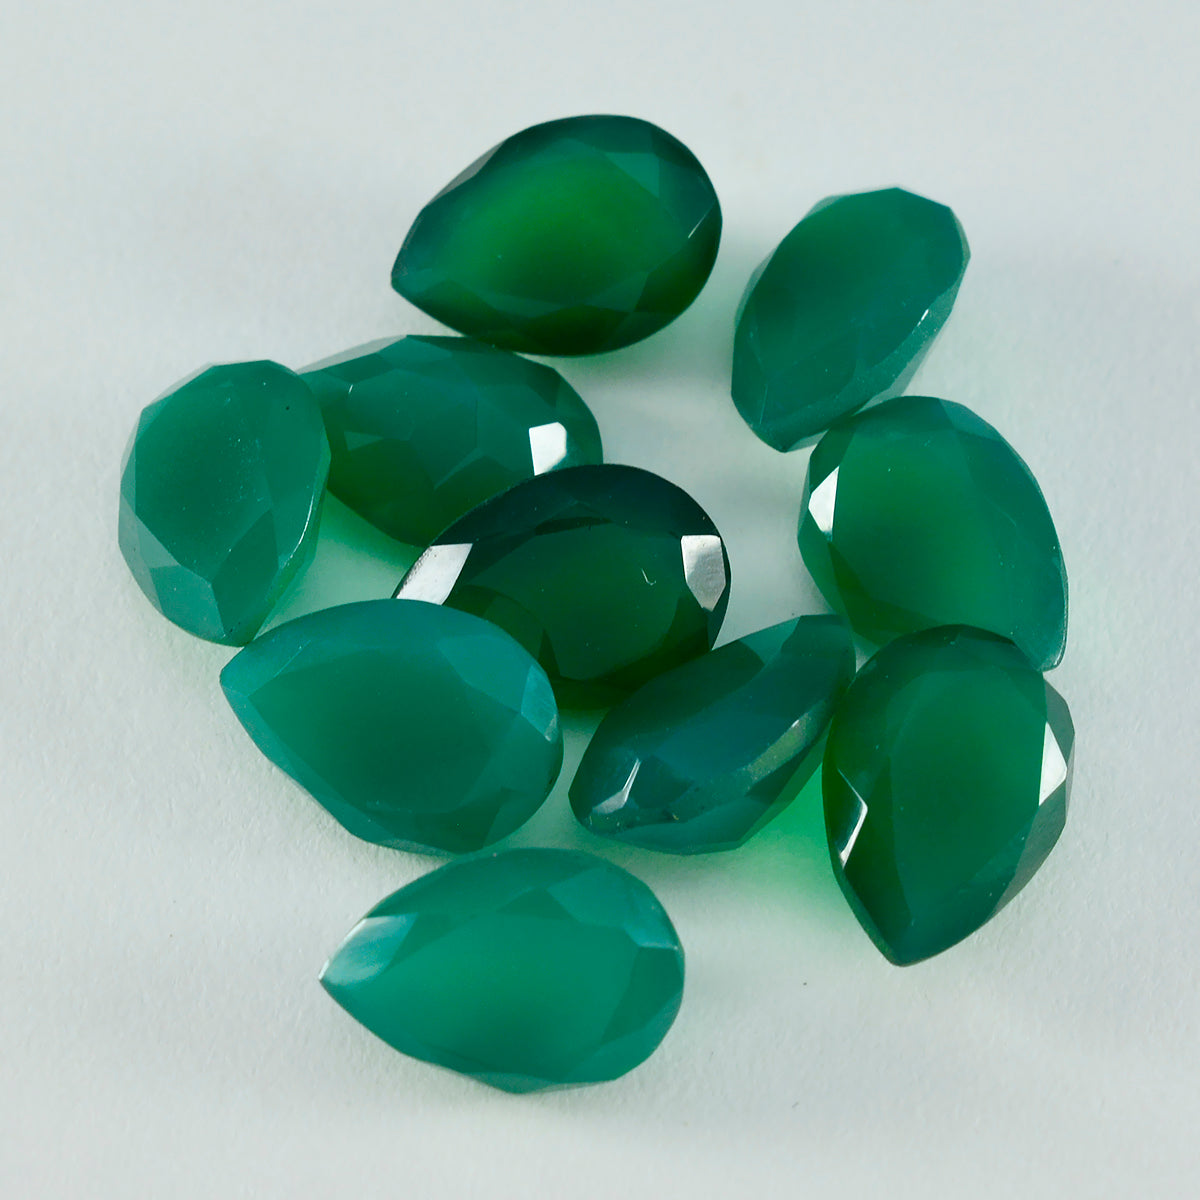 riyogems 1шт настоящая зеленая яшма граненая 6x9 мм грушевидная форма качественный камень